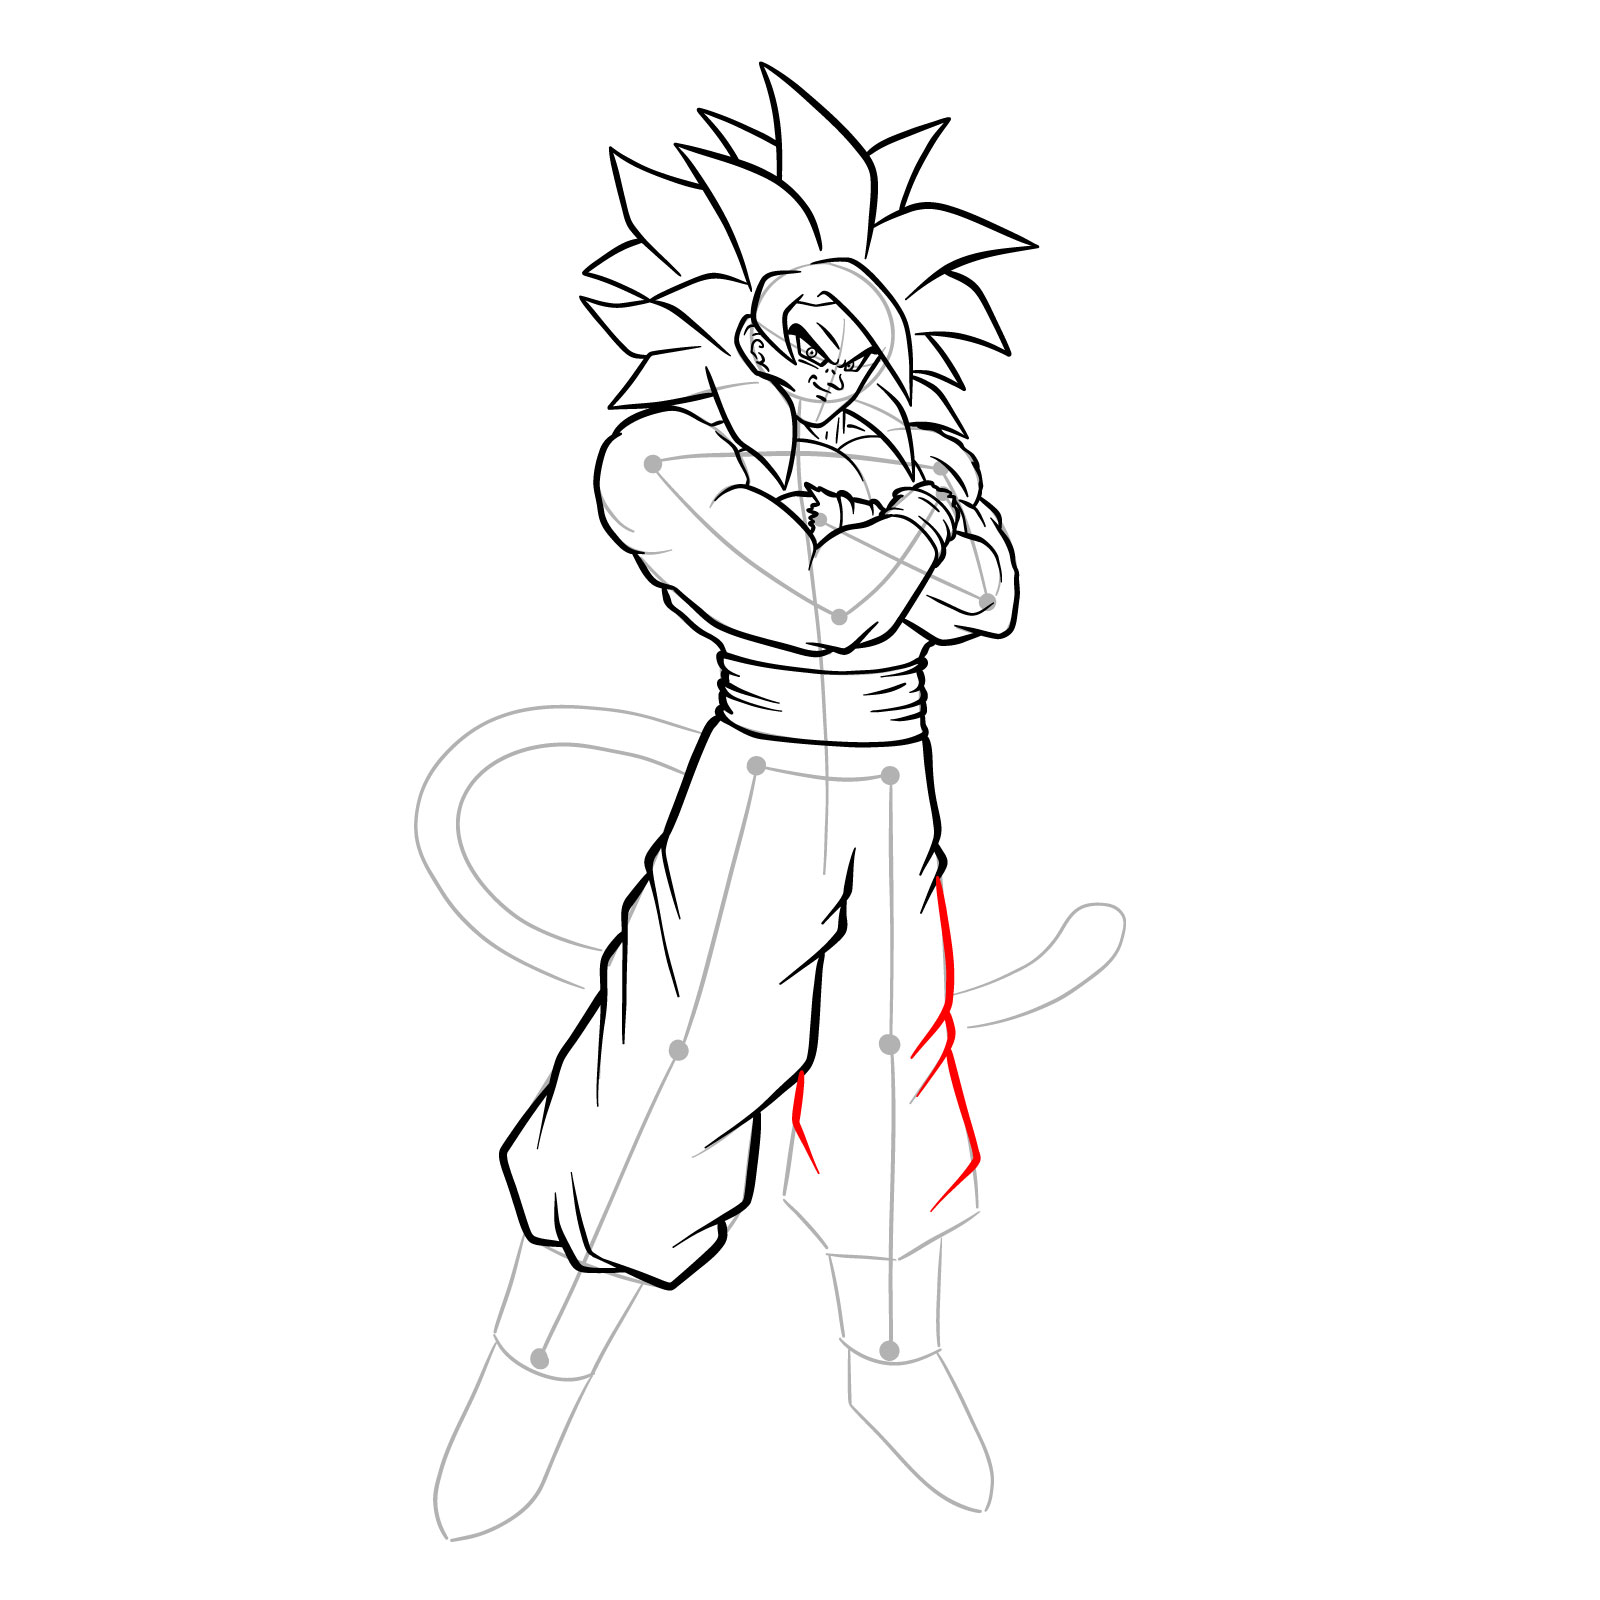 How to tát draw Goku Super Saiyan 4 - step 26